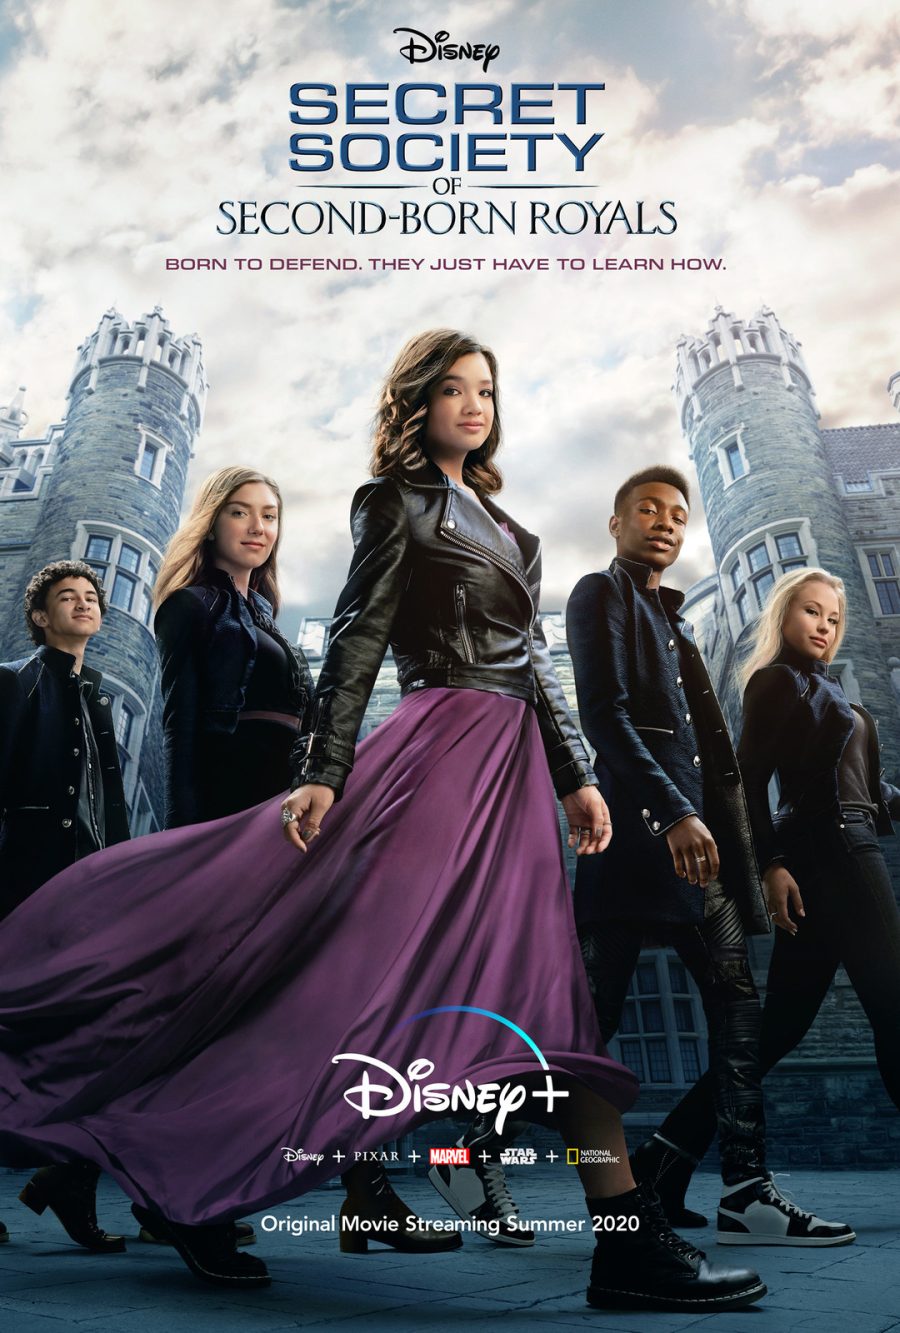 Secret Society of Second Born Royals Poster Disney Movie Art Film Print 24x36"